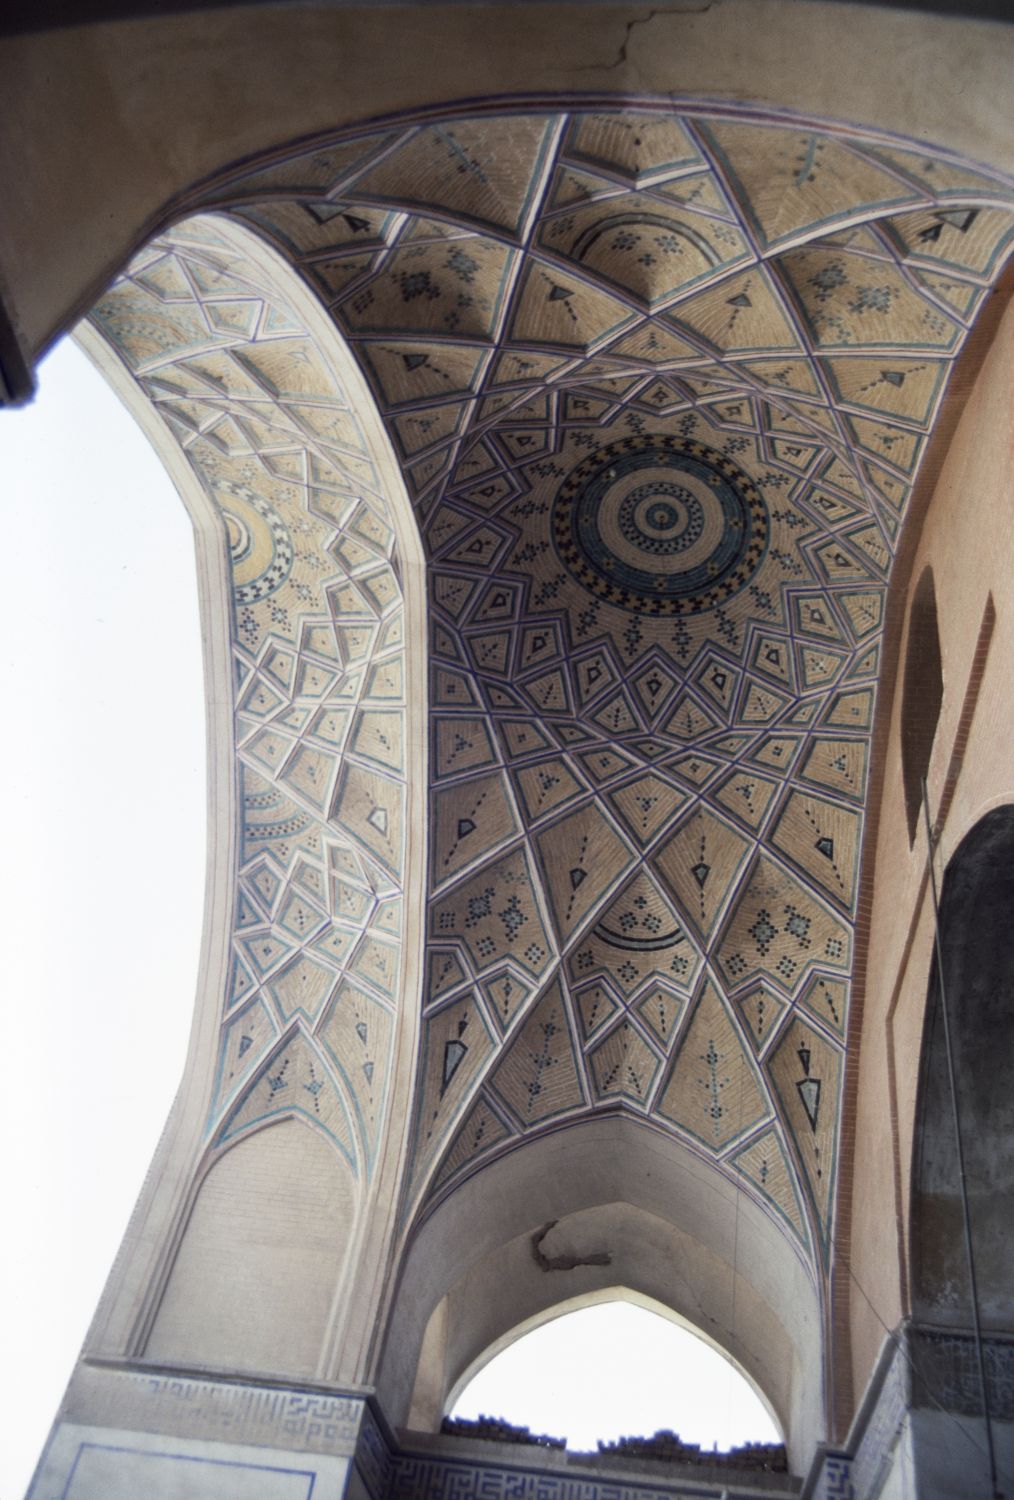 Masjid-i Jami' (Kashan) - Qibla iwan: view of vault with <span style="font-style: italic;">yazdi-bandi</span>&nbsp;decoration.